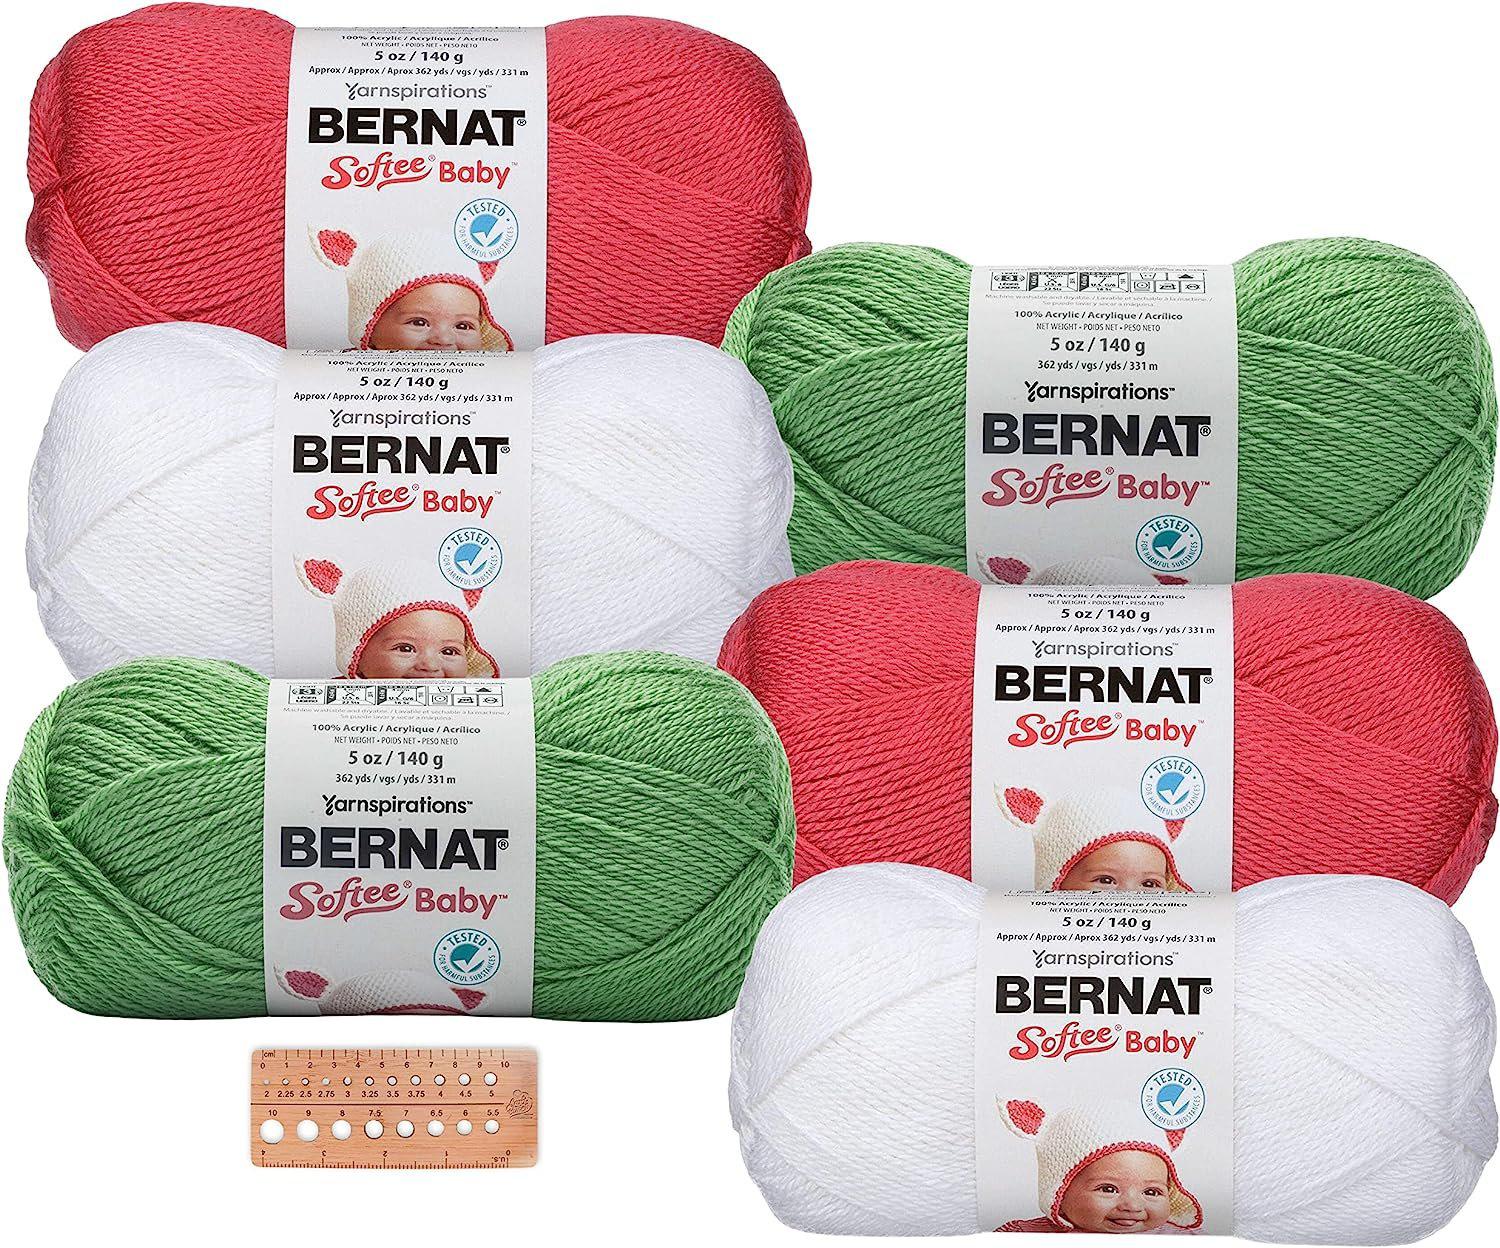 Bernat Softee Baby Yarn - 6 Skein Assortment (Christmas Holiday